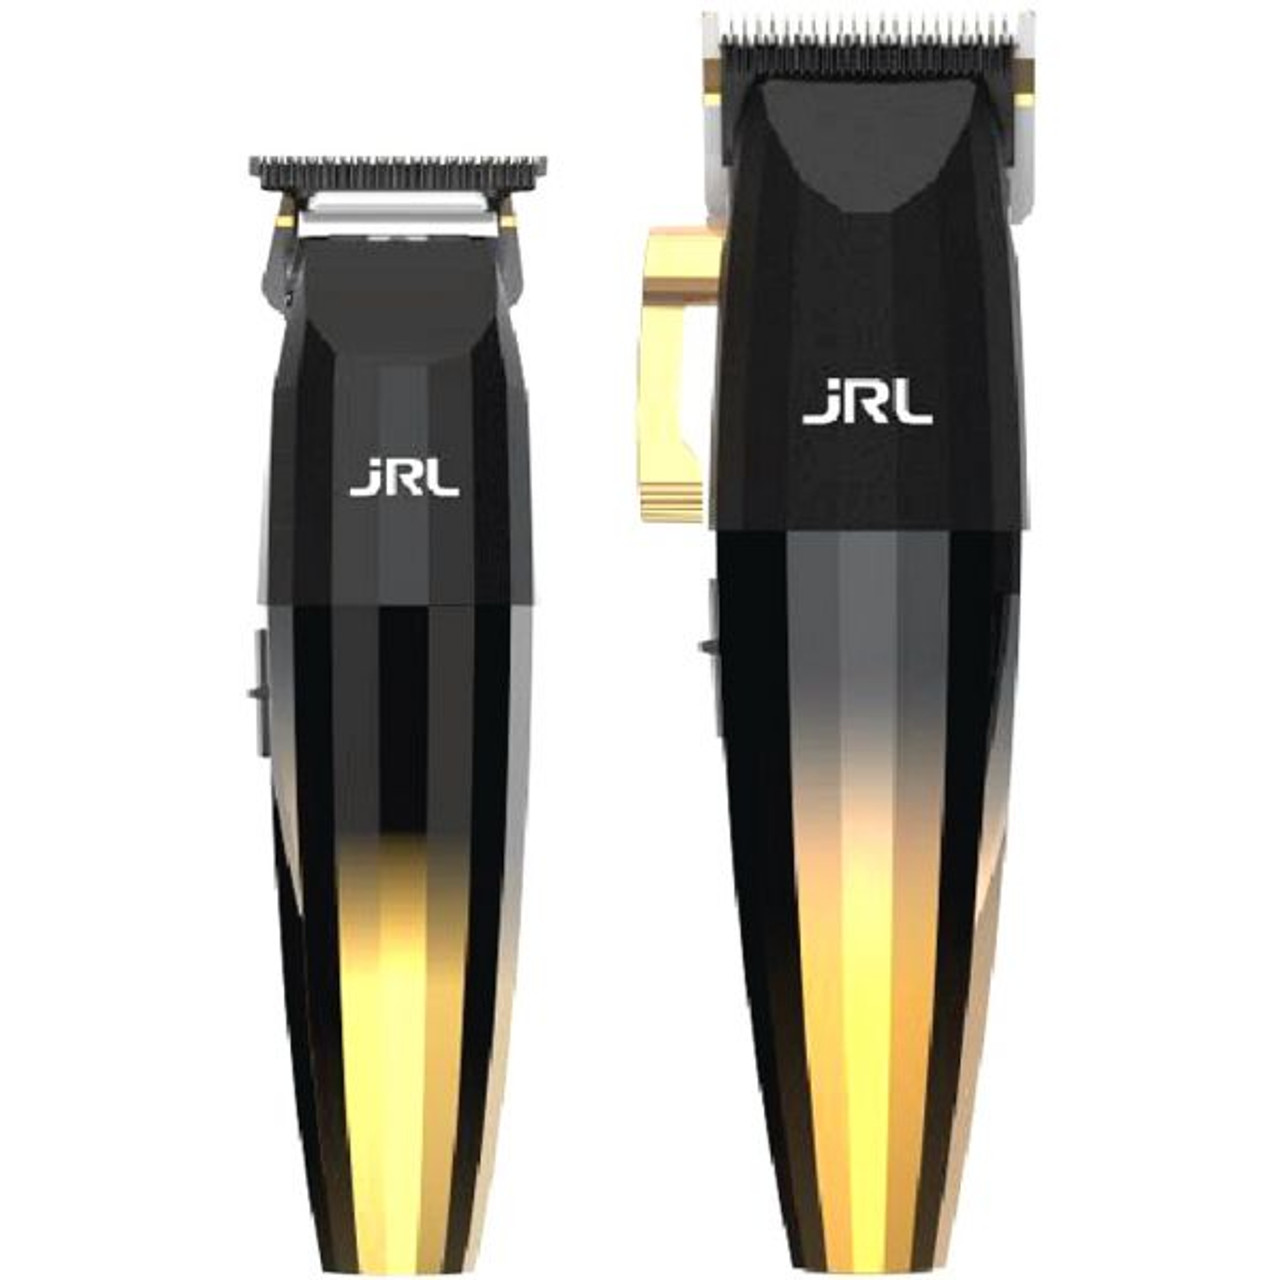 JRL FreshFade 2020C Clipper & 2020T Trimmer Duo Gold